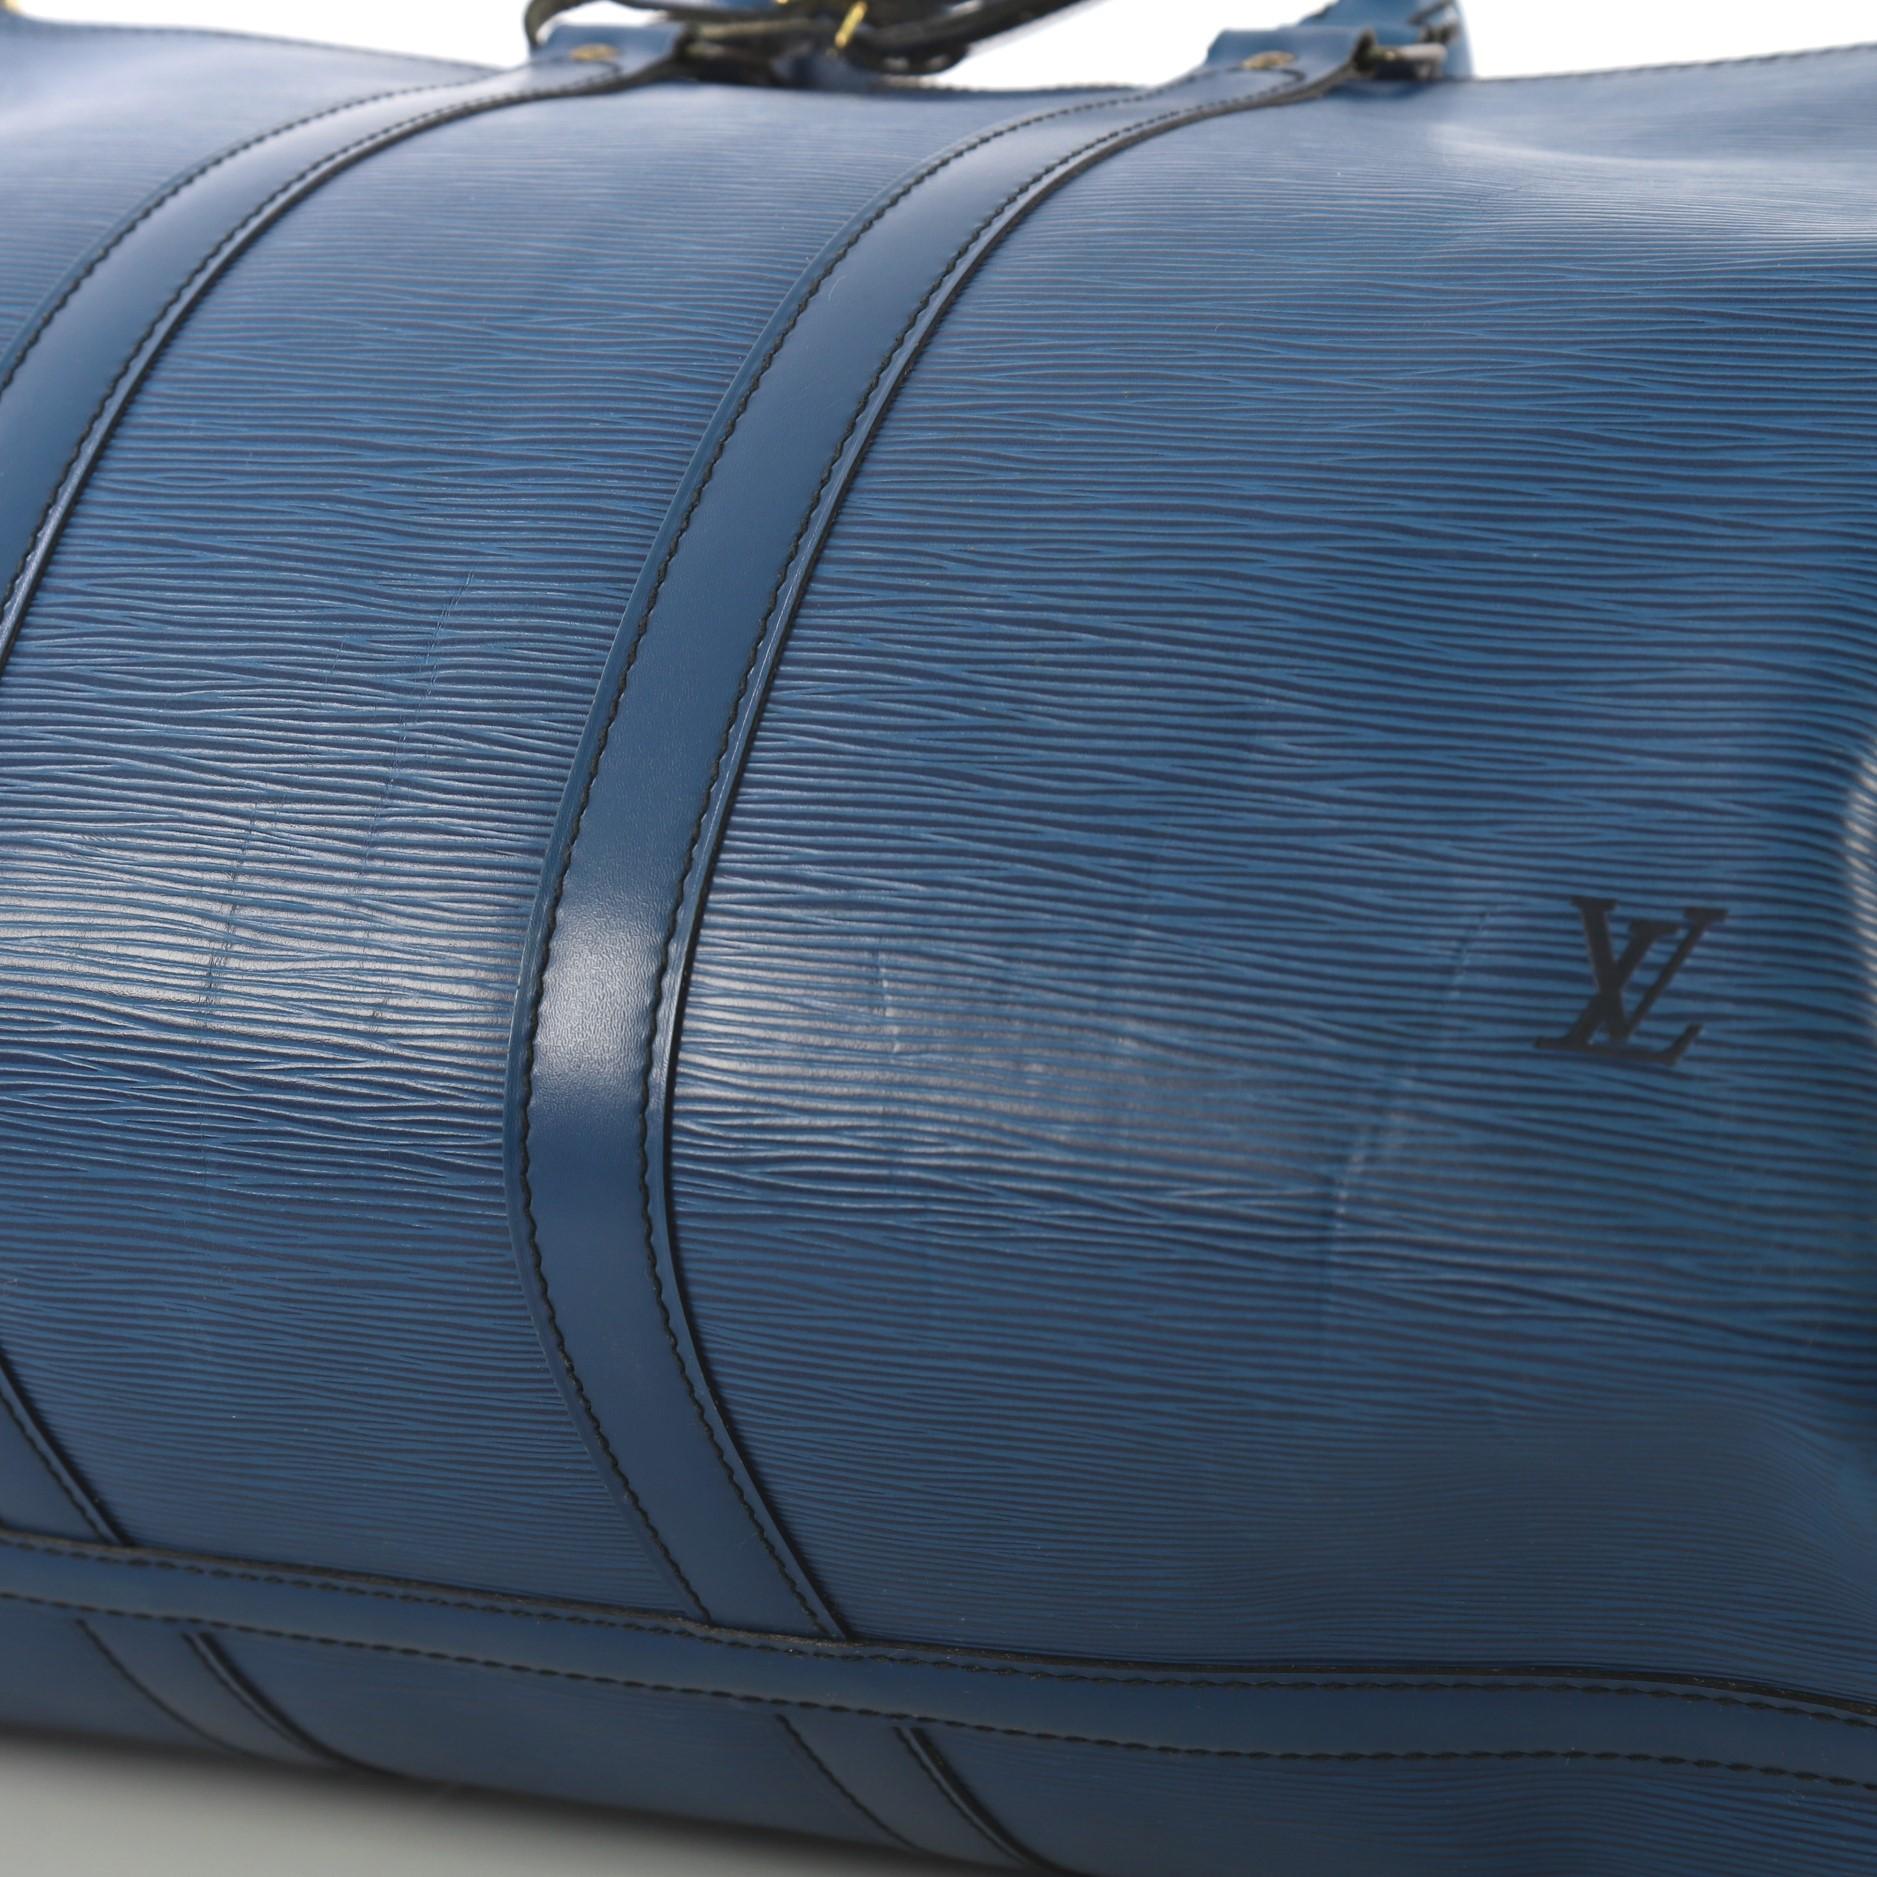 Women's or Men's Louis Vuitton Keepall Bag Epi Leather 45